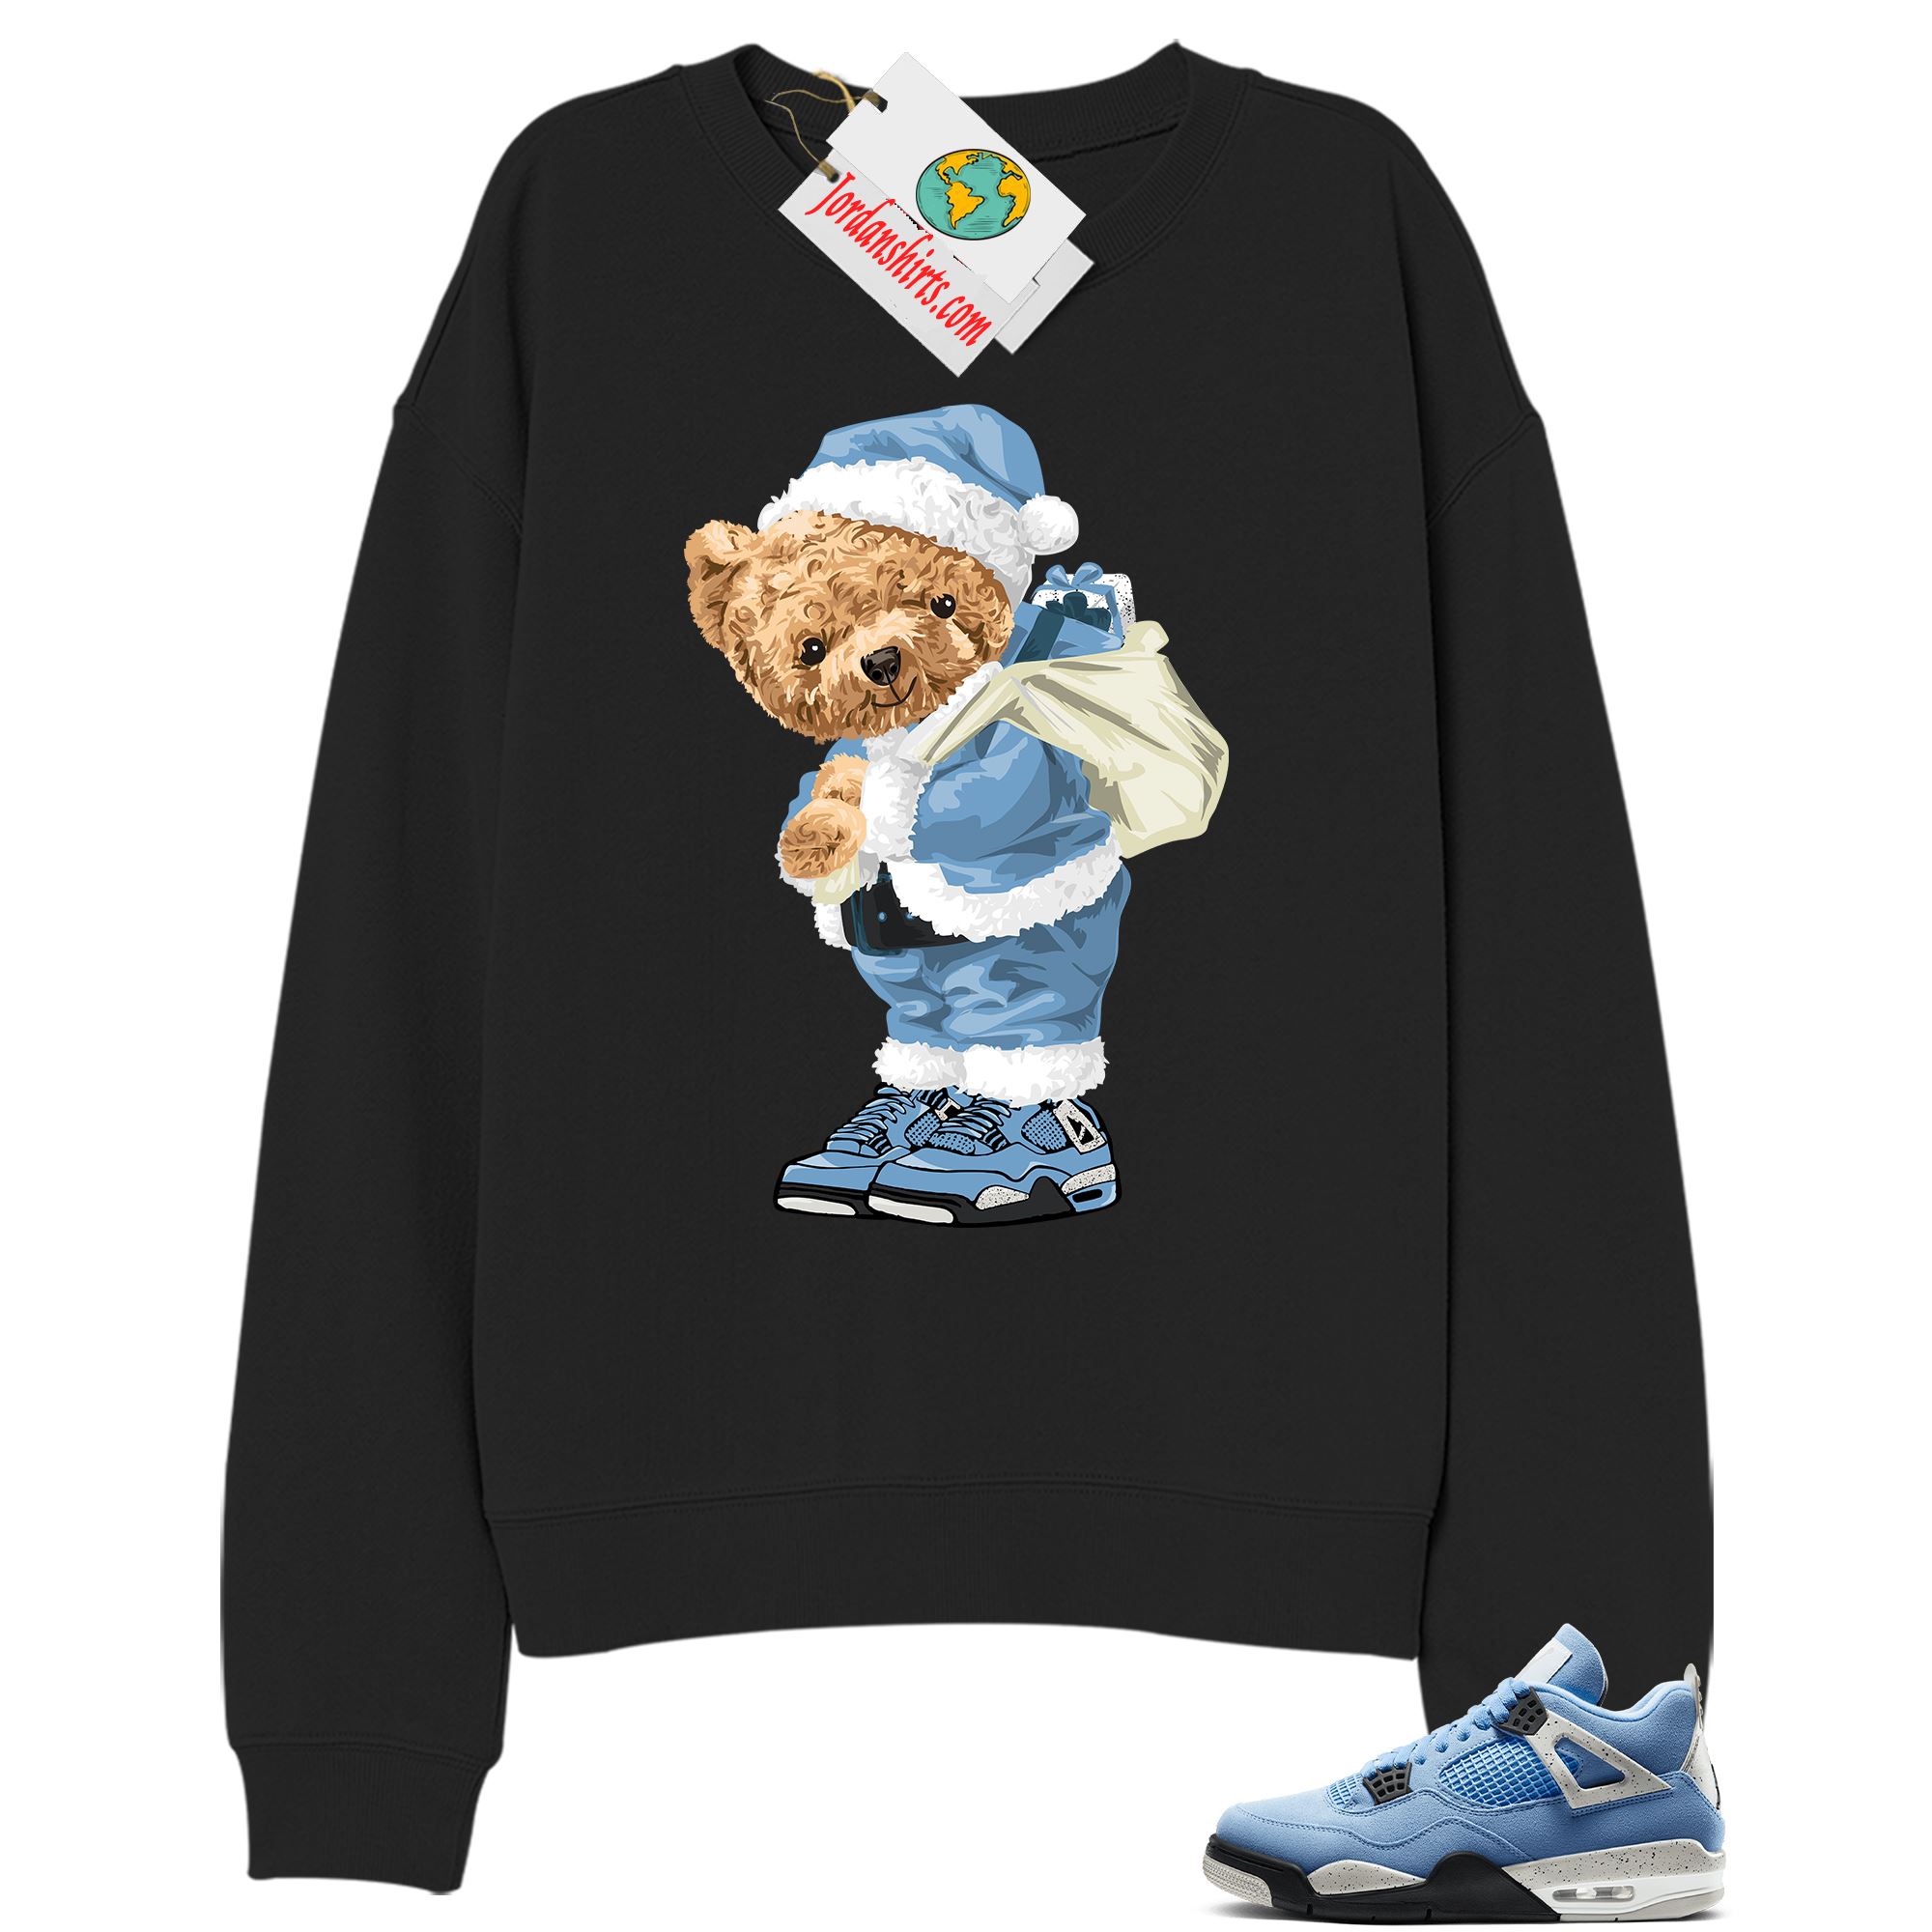 Jordan 4 Sweatshirt, Teddy Bear In Santa Claus Black Sweatshirt Air Jordan 4 University Blue 4s Size Up To 5xl